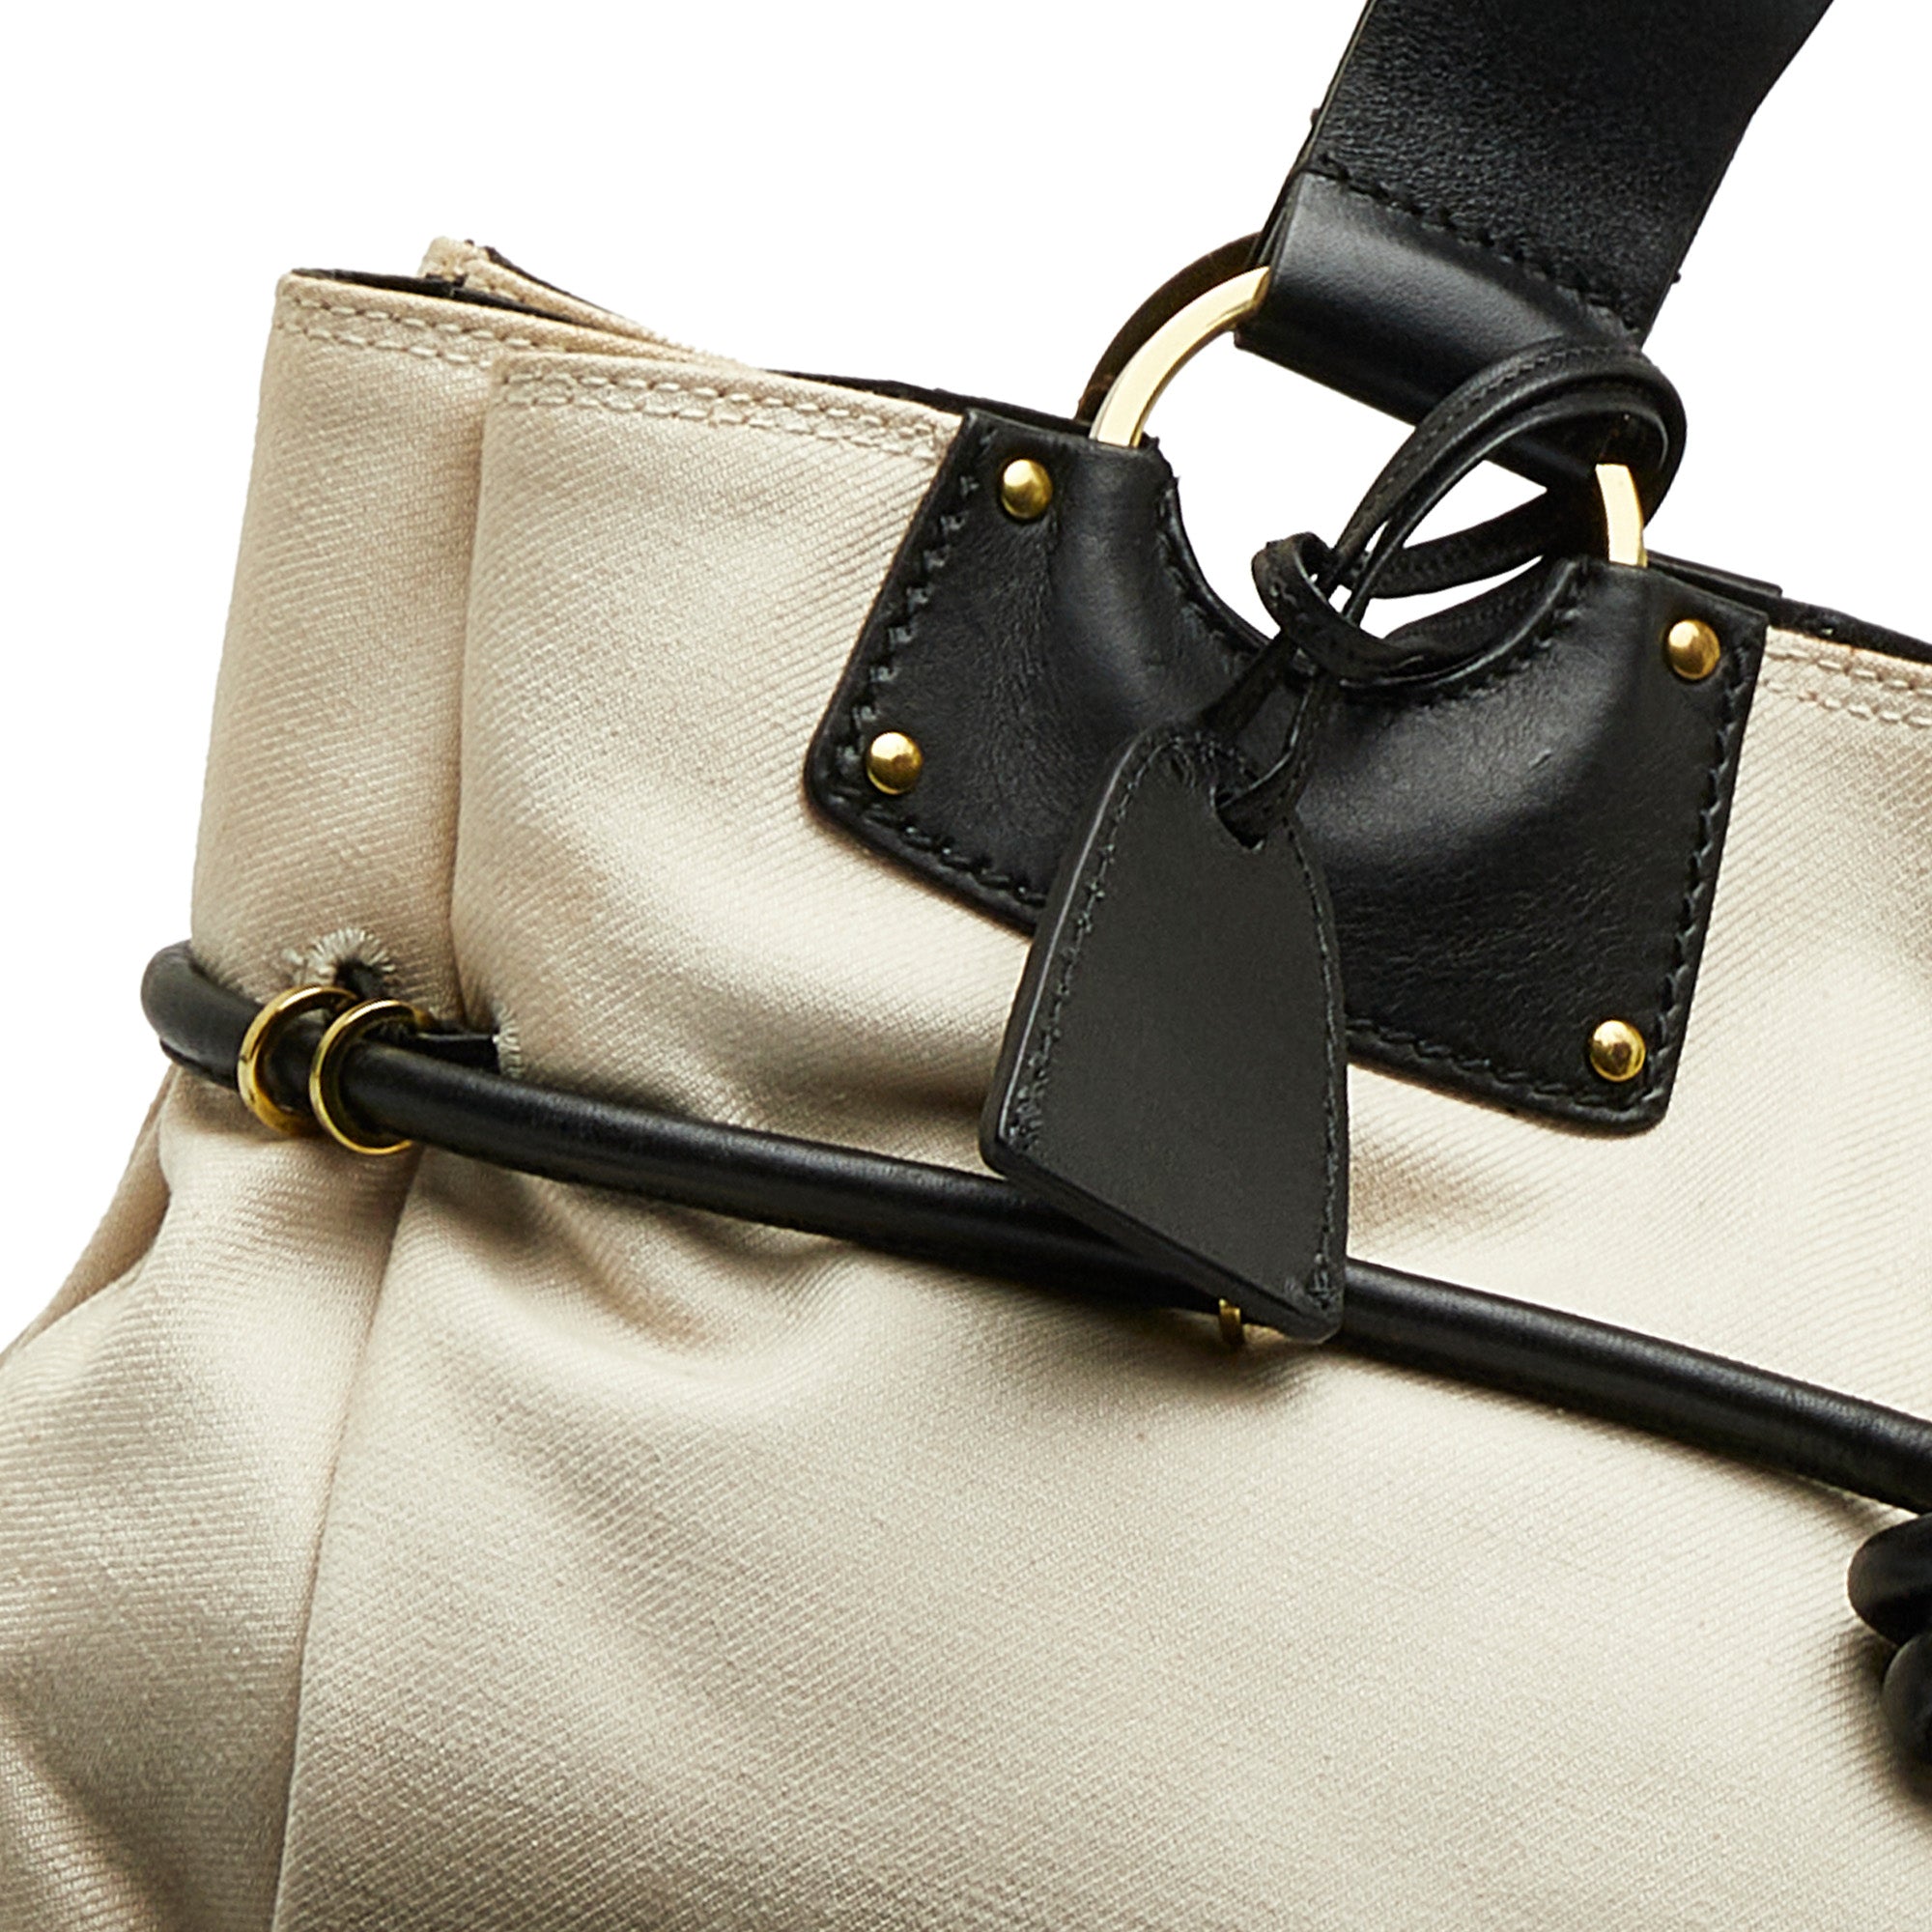 White Gucci Canvas Handbag - Designer Revival